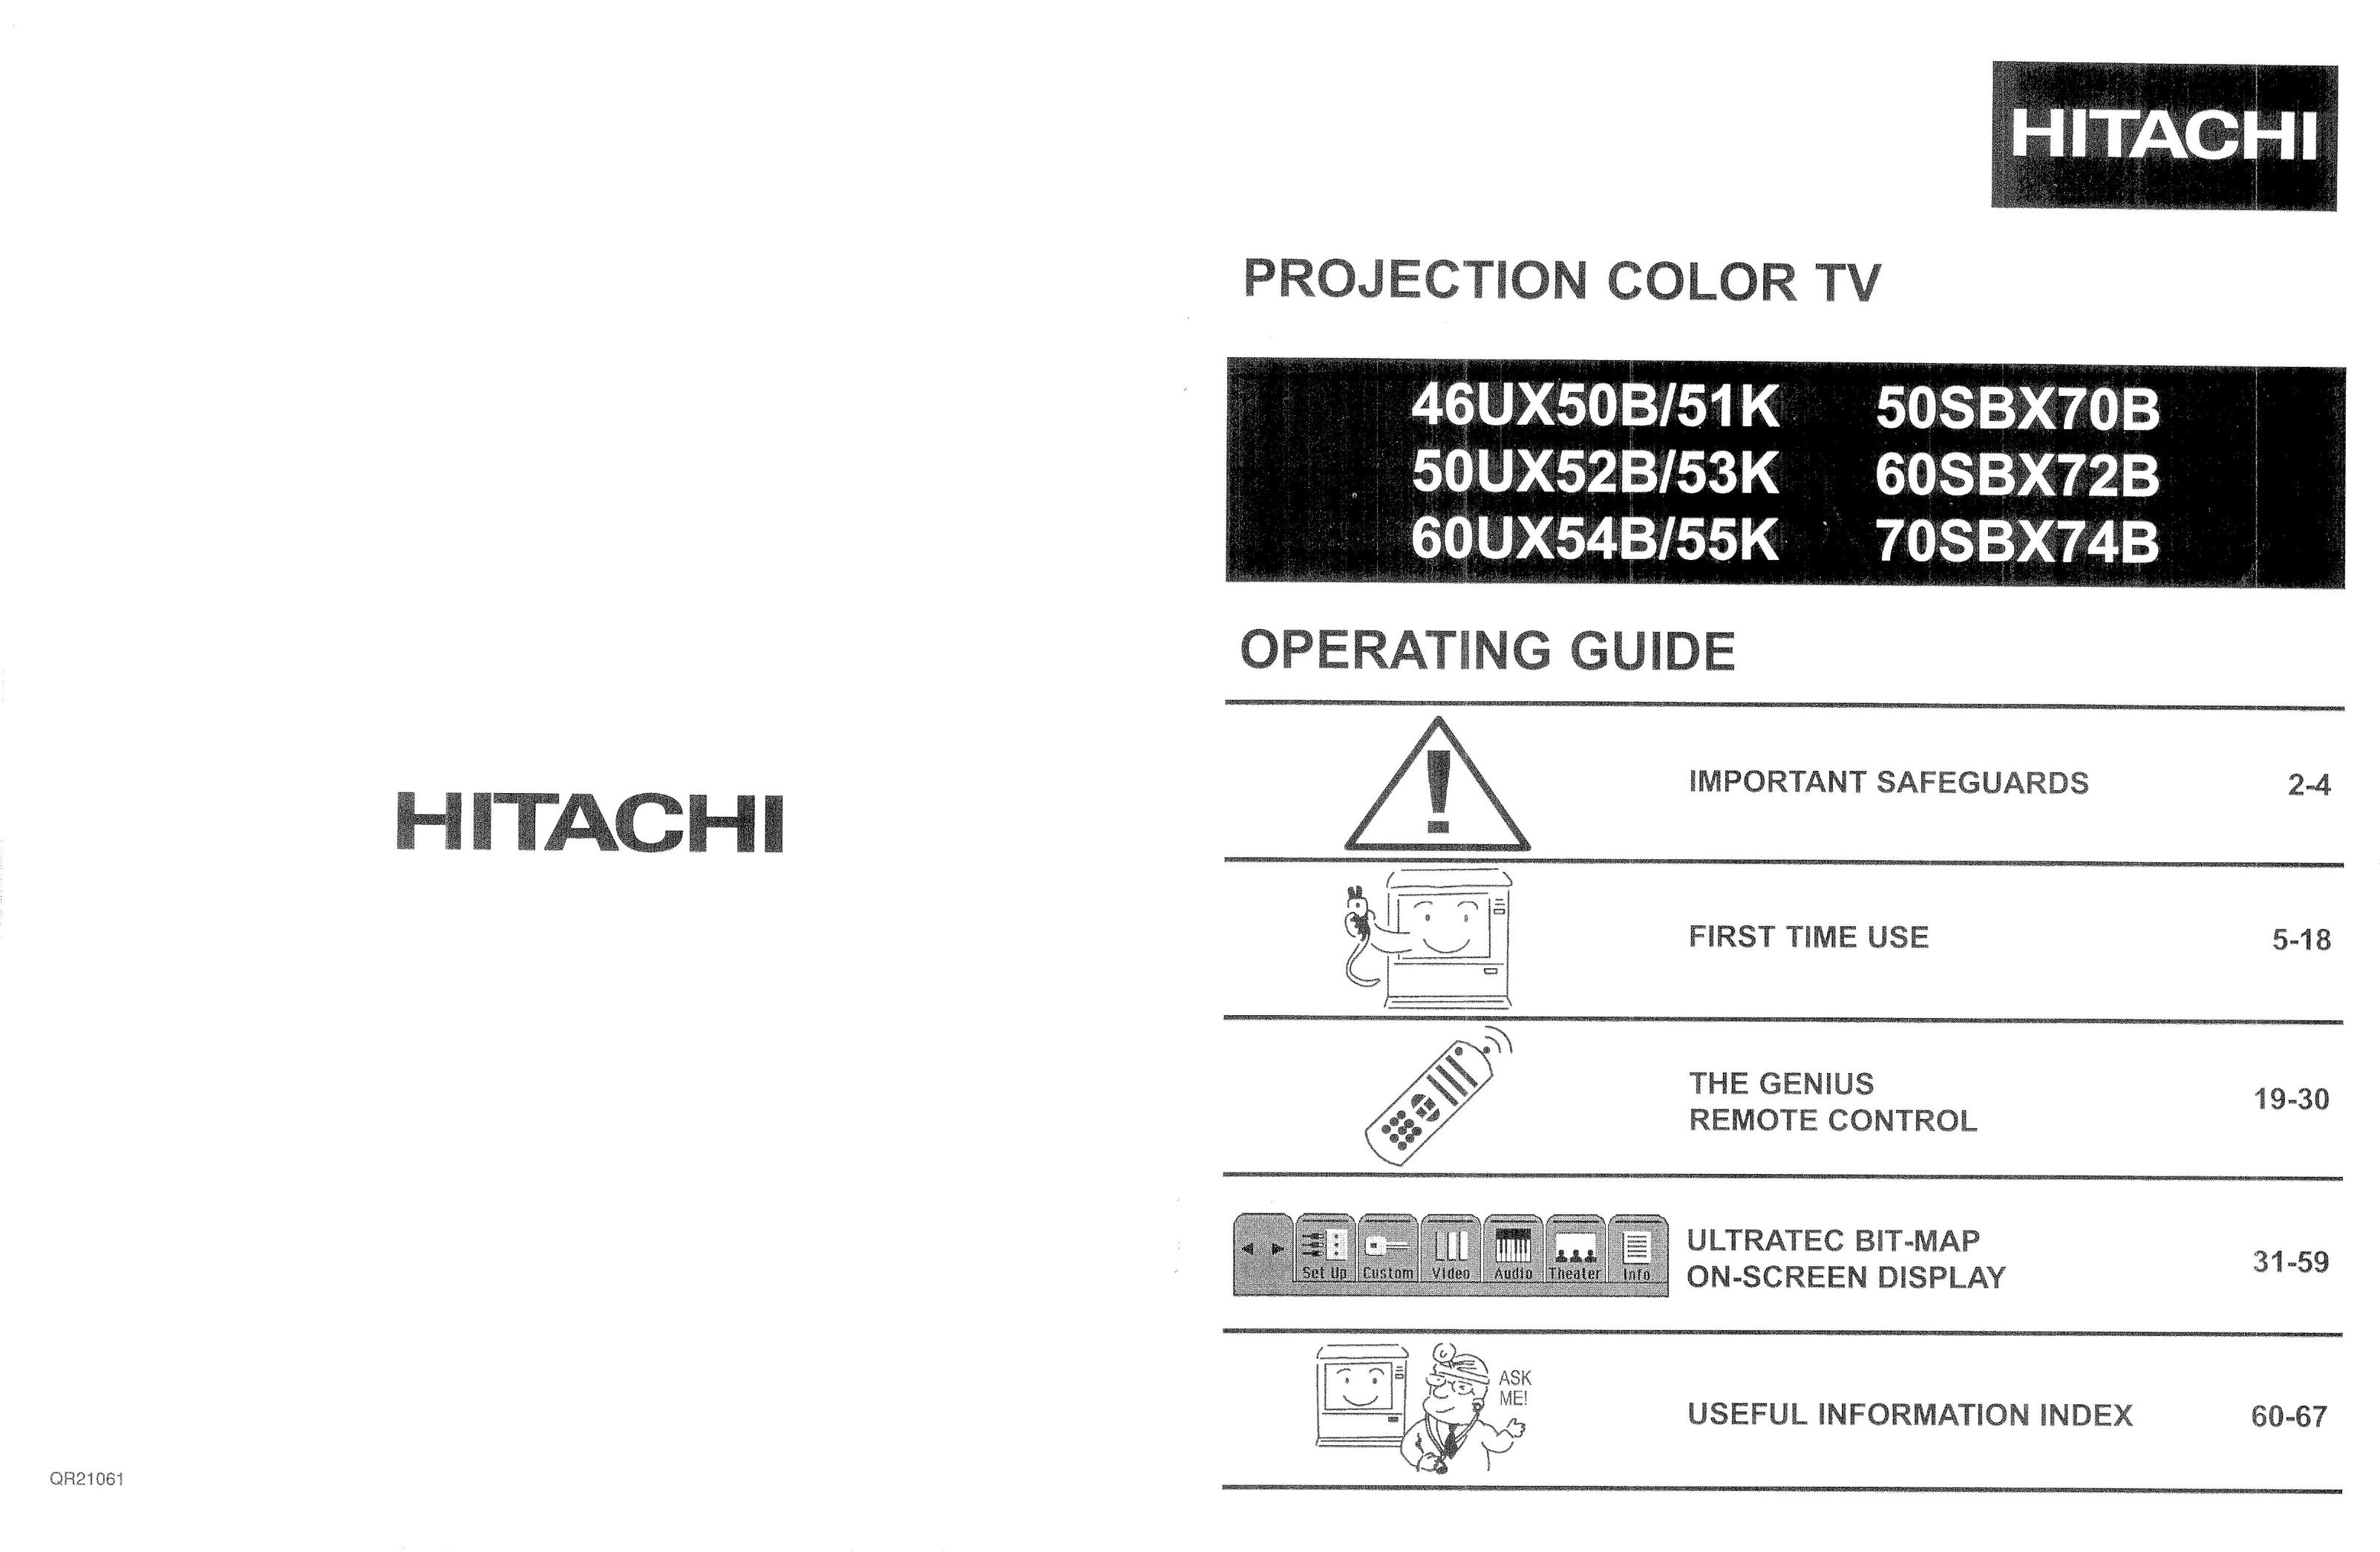 Hitachi 70SBX74B CRT Television User Manual